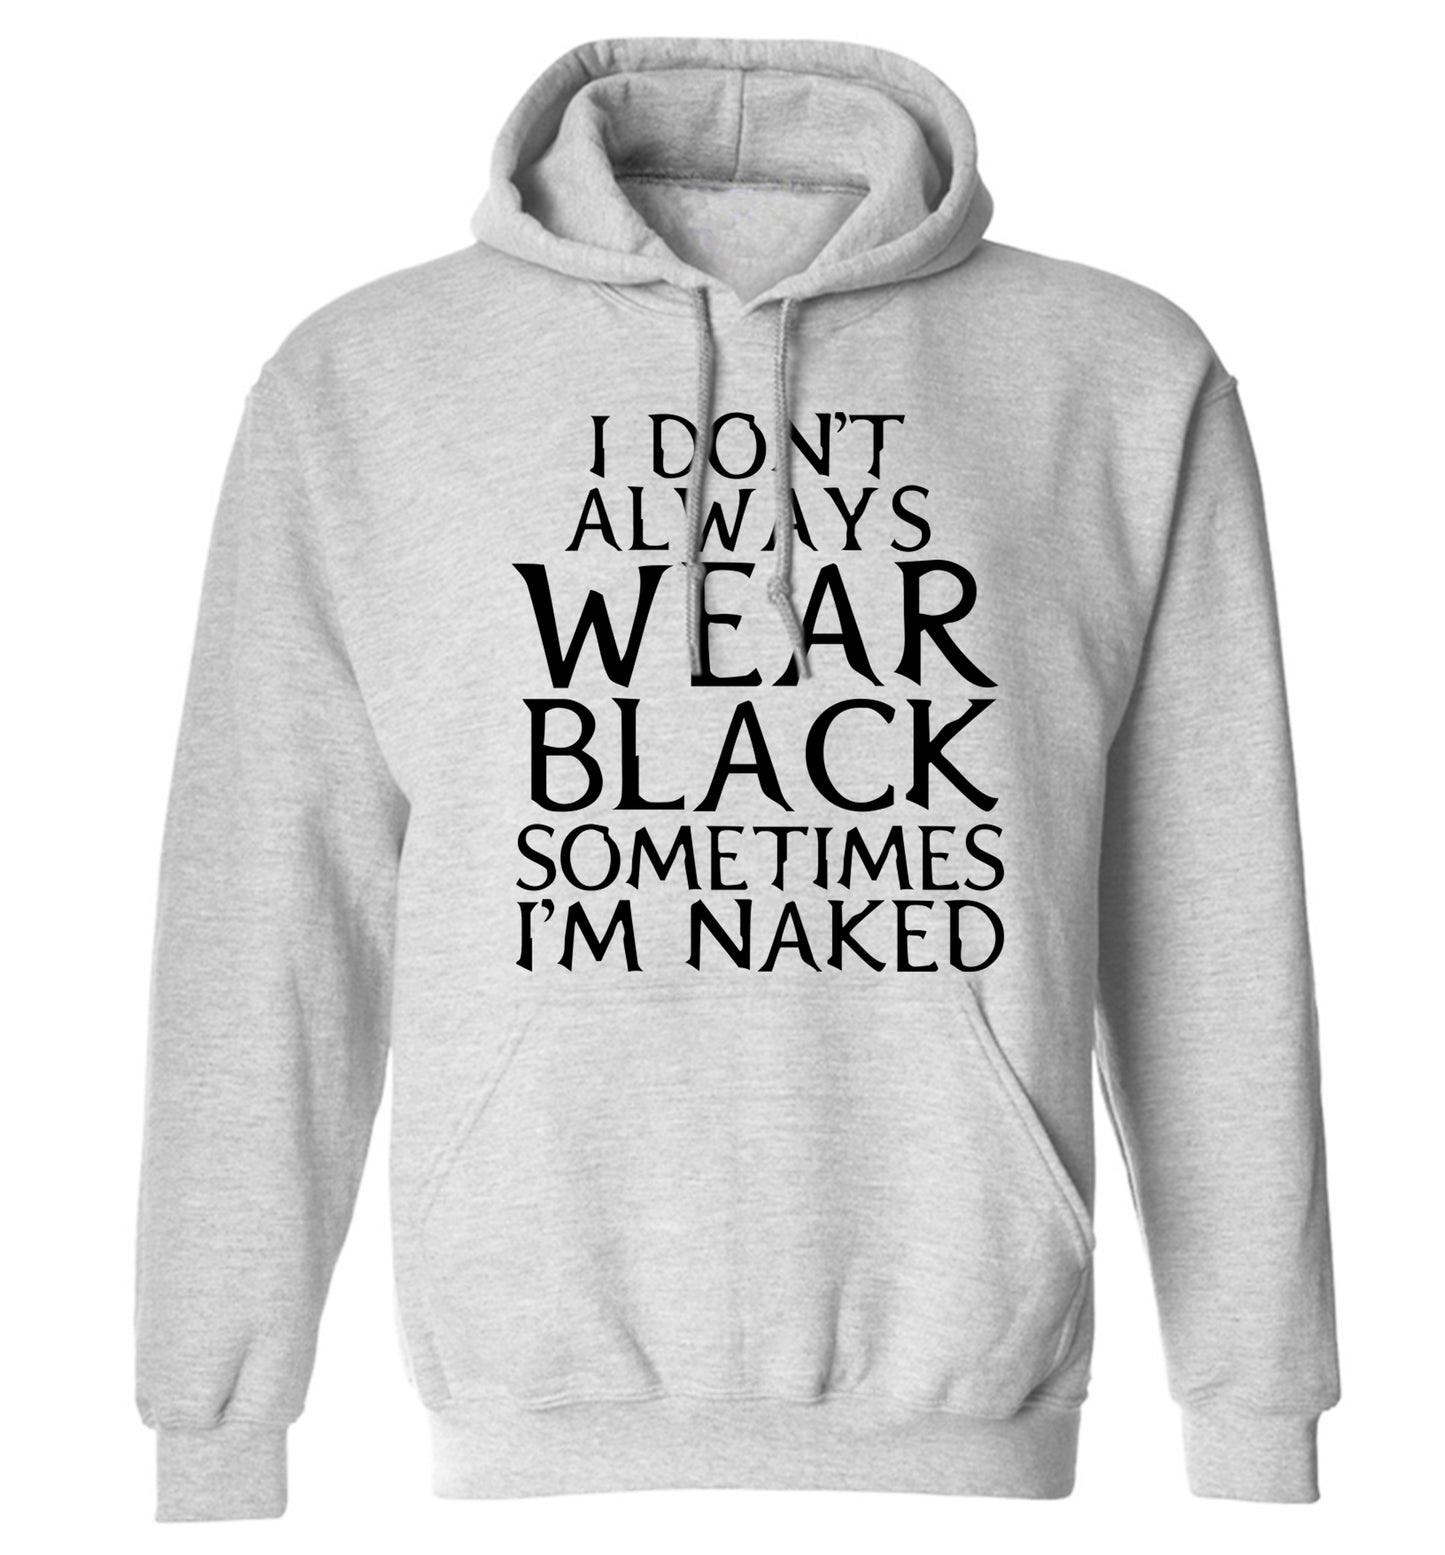 I don't always wear black sometimes I'm naked adults unisex grey hoodie 2XL